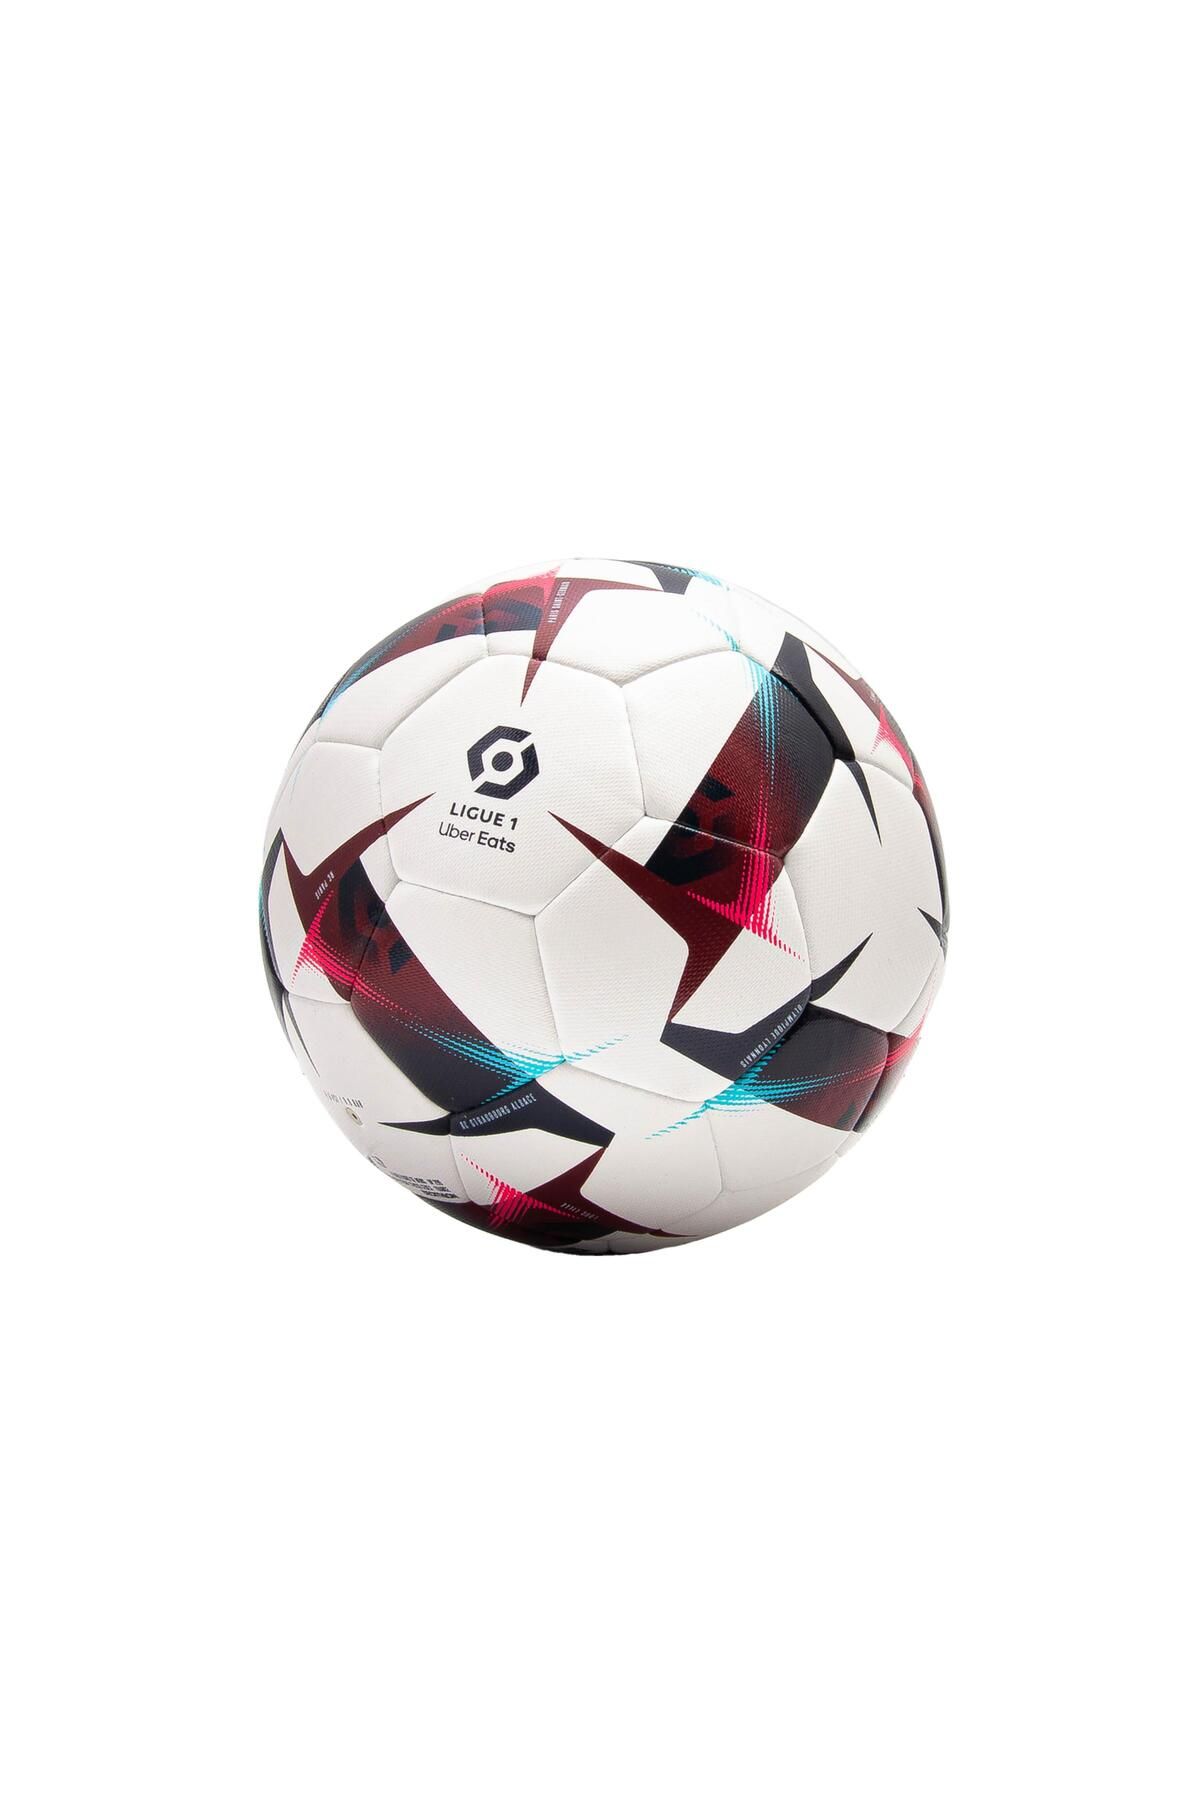 Decathlon Kipsta Futbol Topu - Fransa Ligue 1 Resmi Maç Topu -